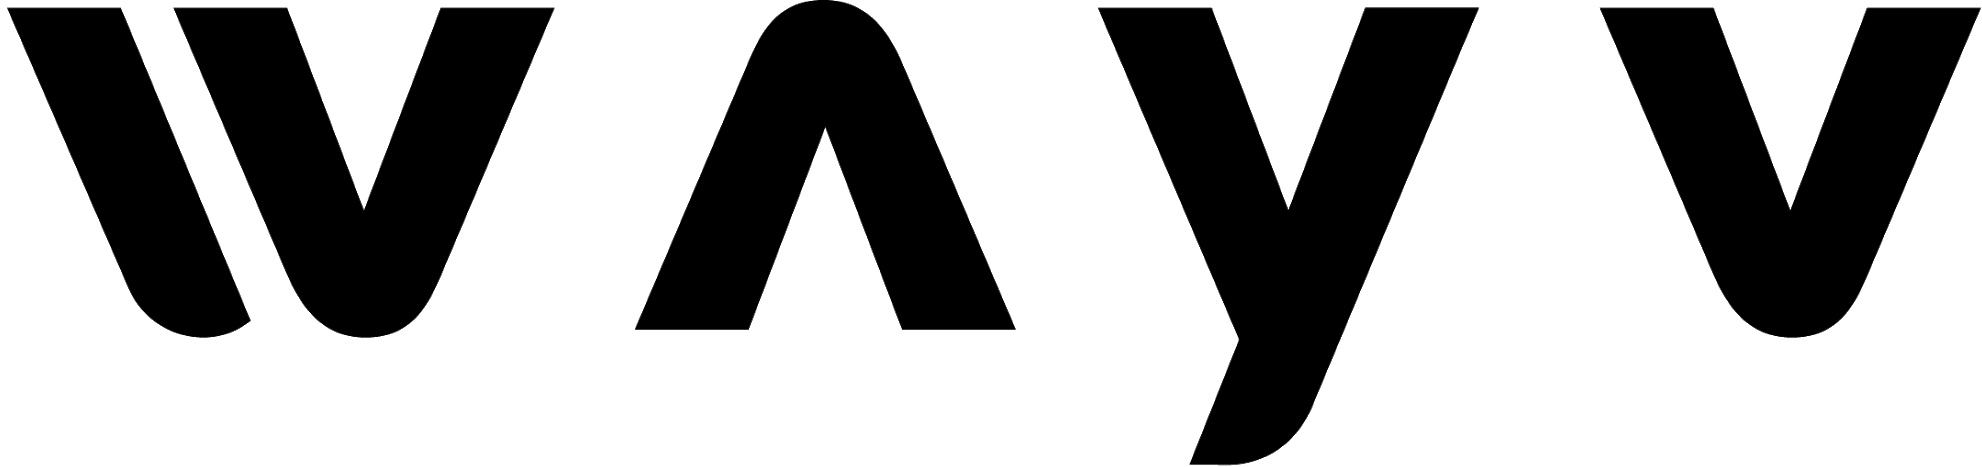 WAYV logo